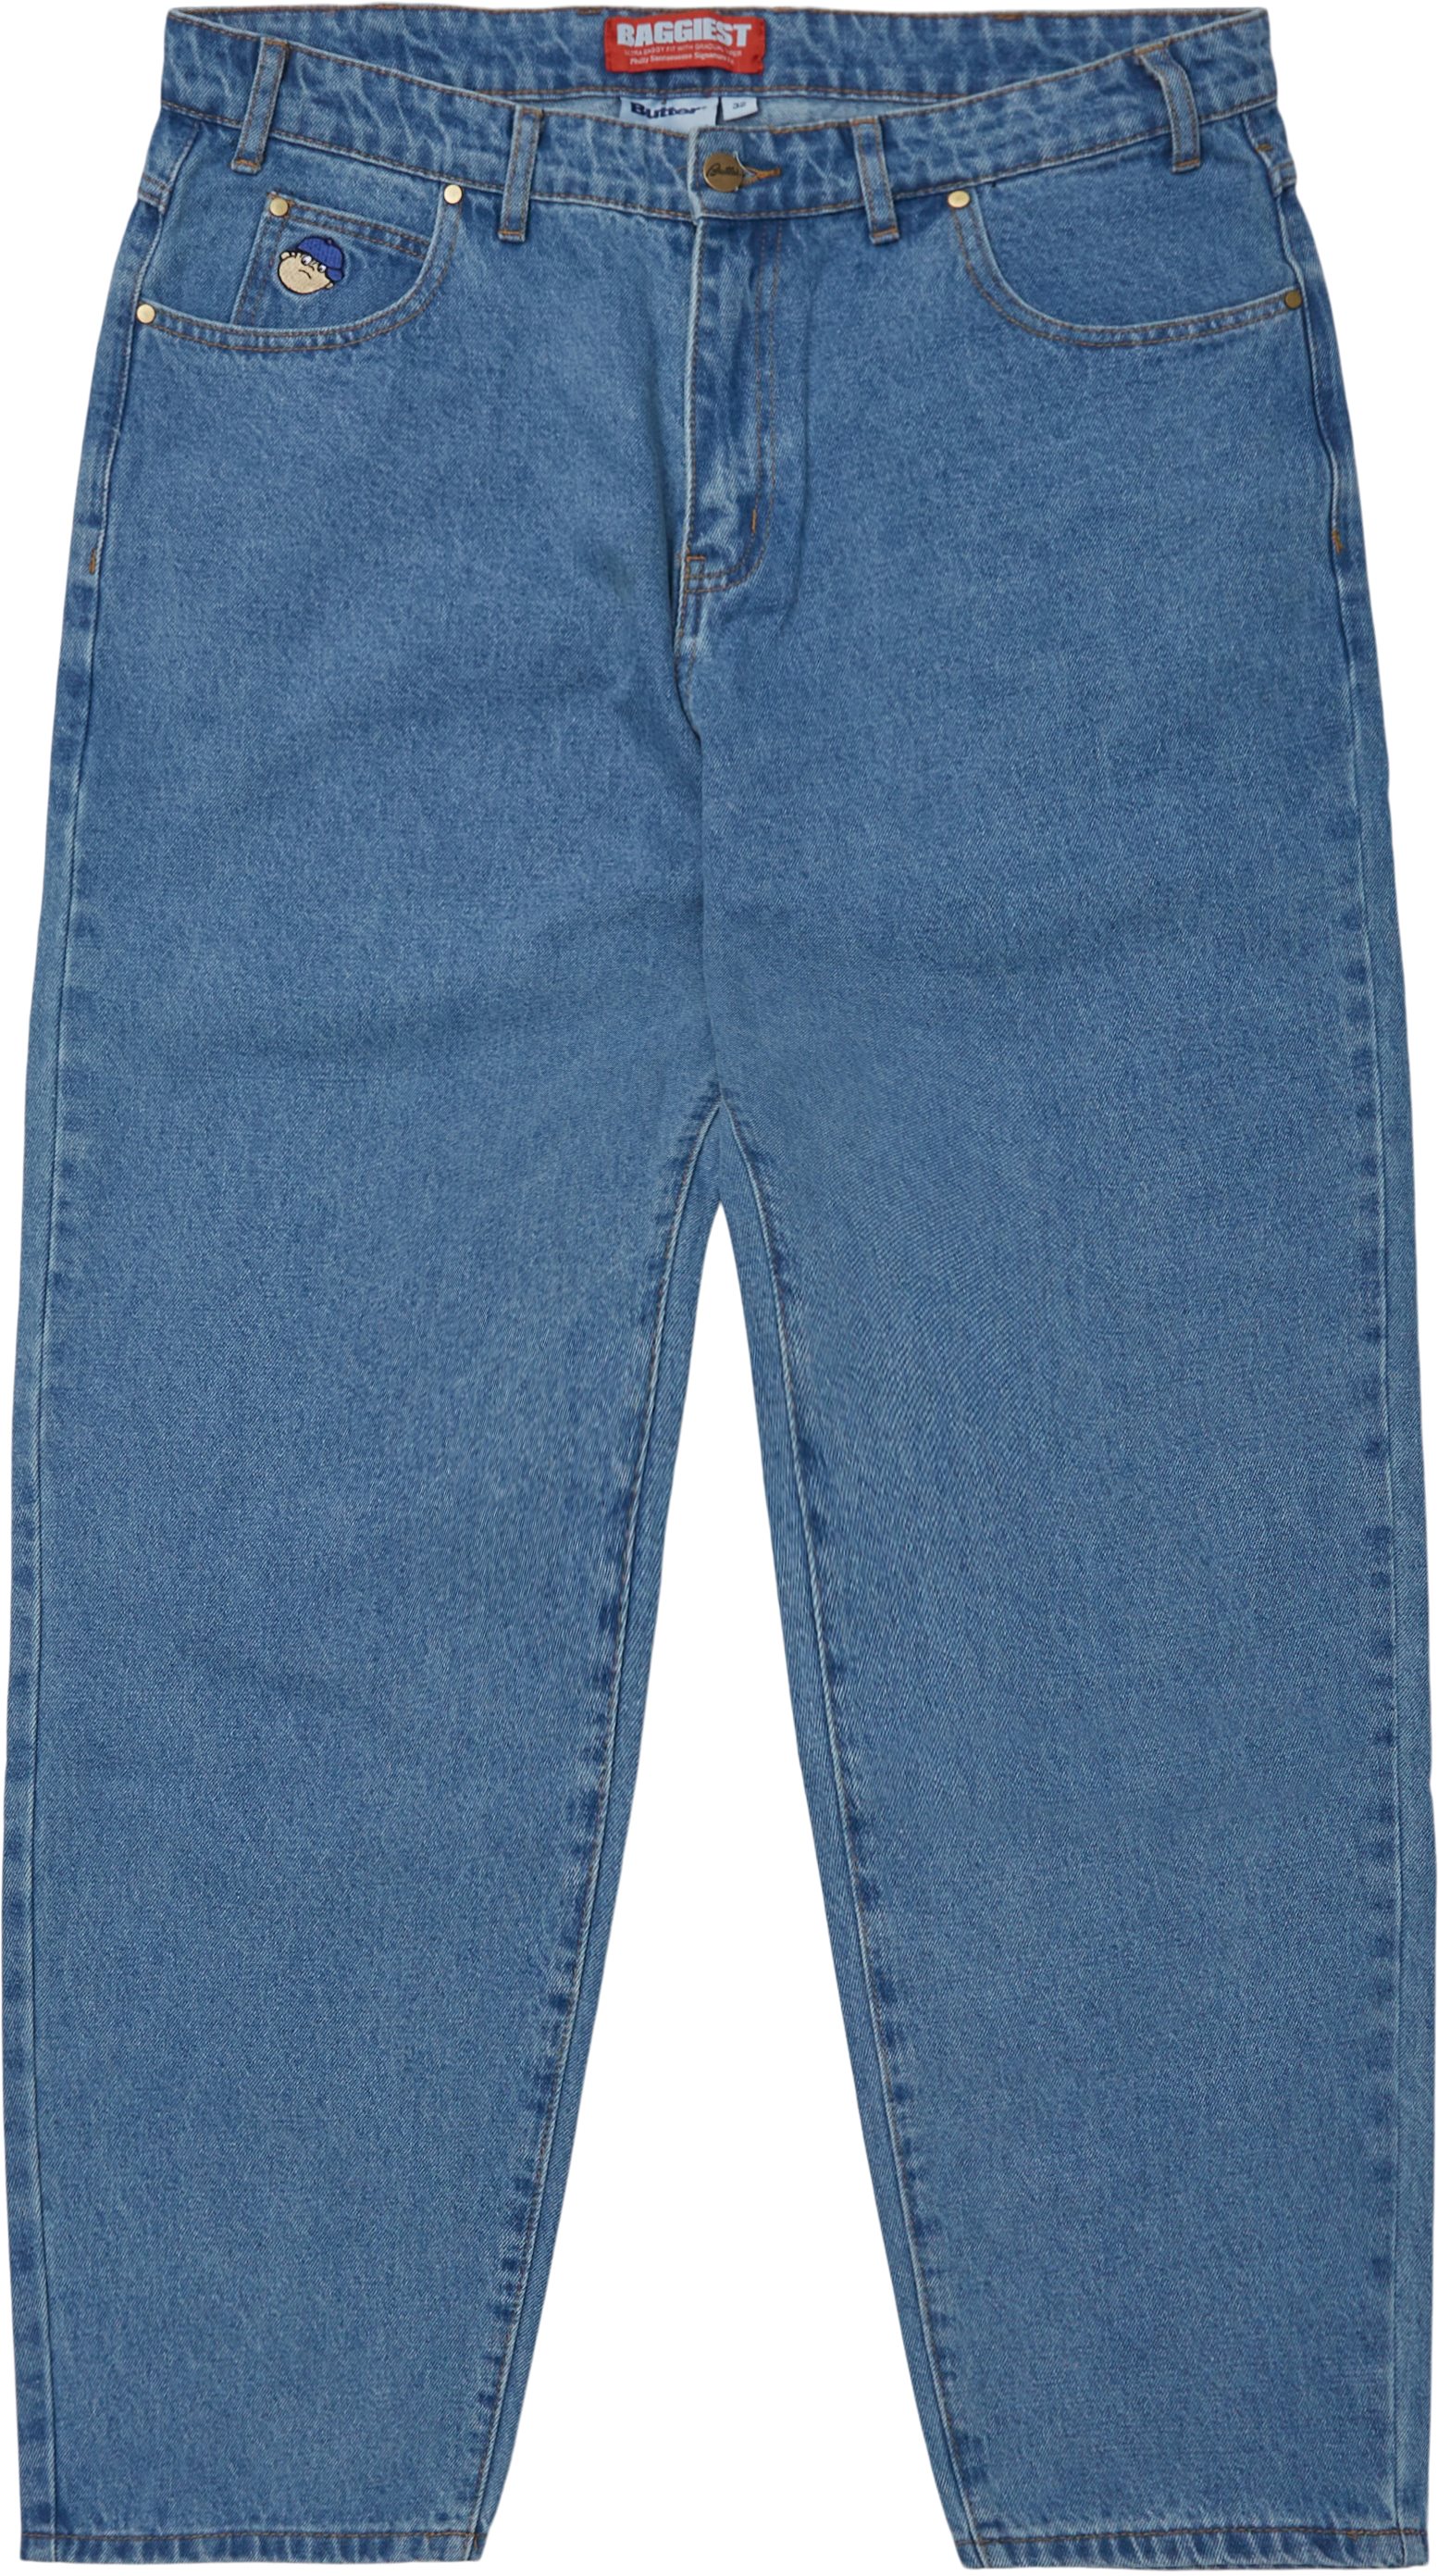 Santosuosso Jeans - Jeans - Loose fit - Denim